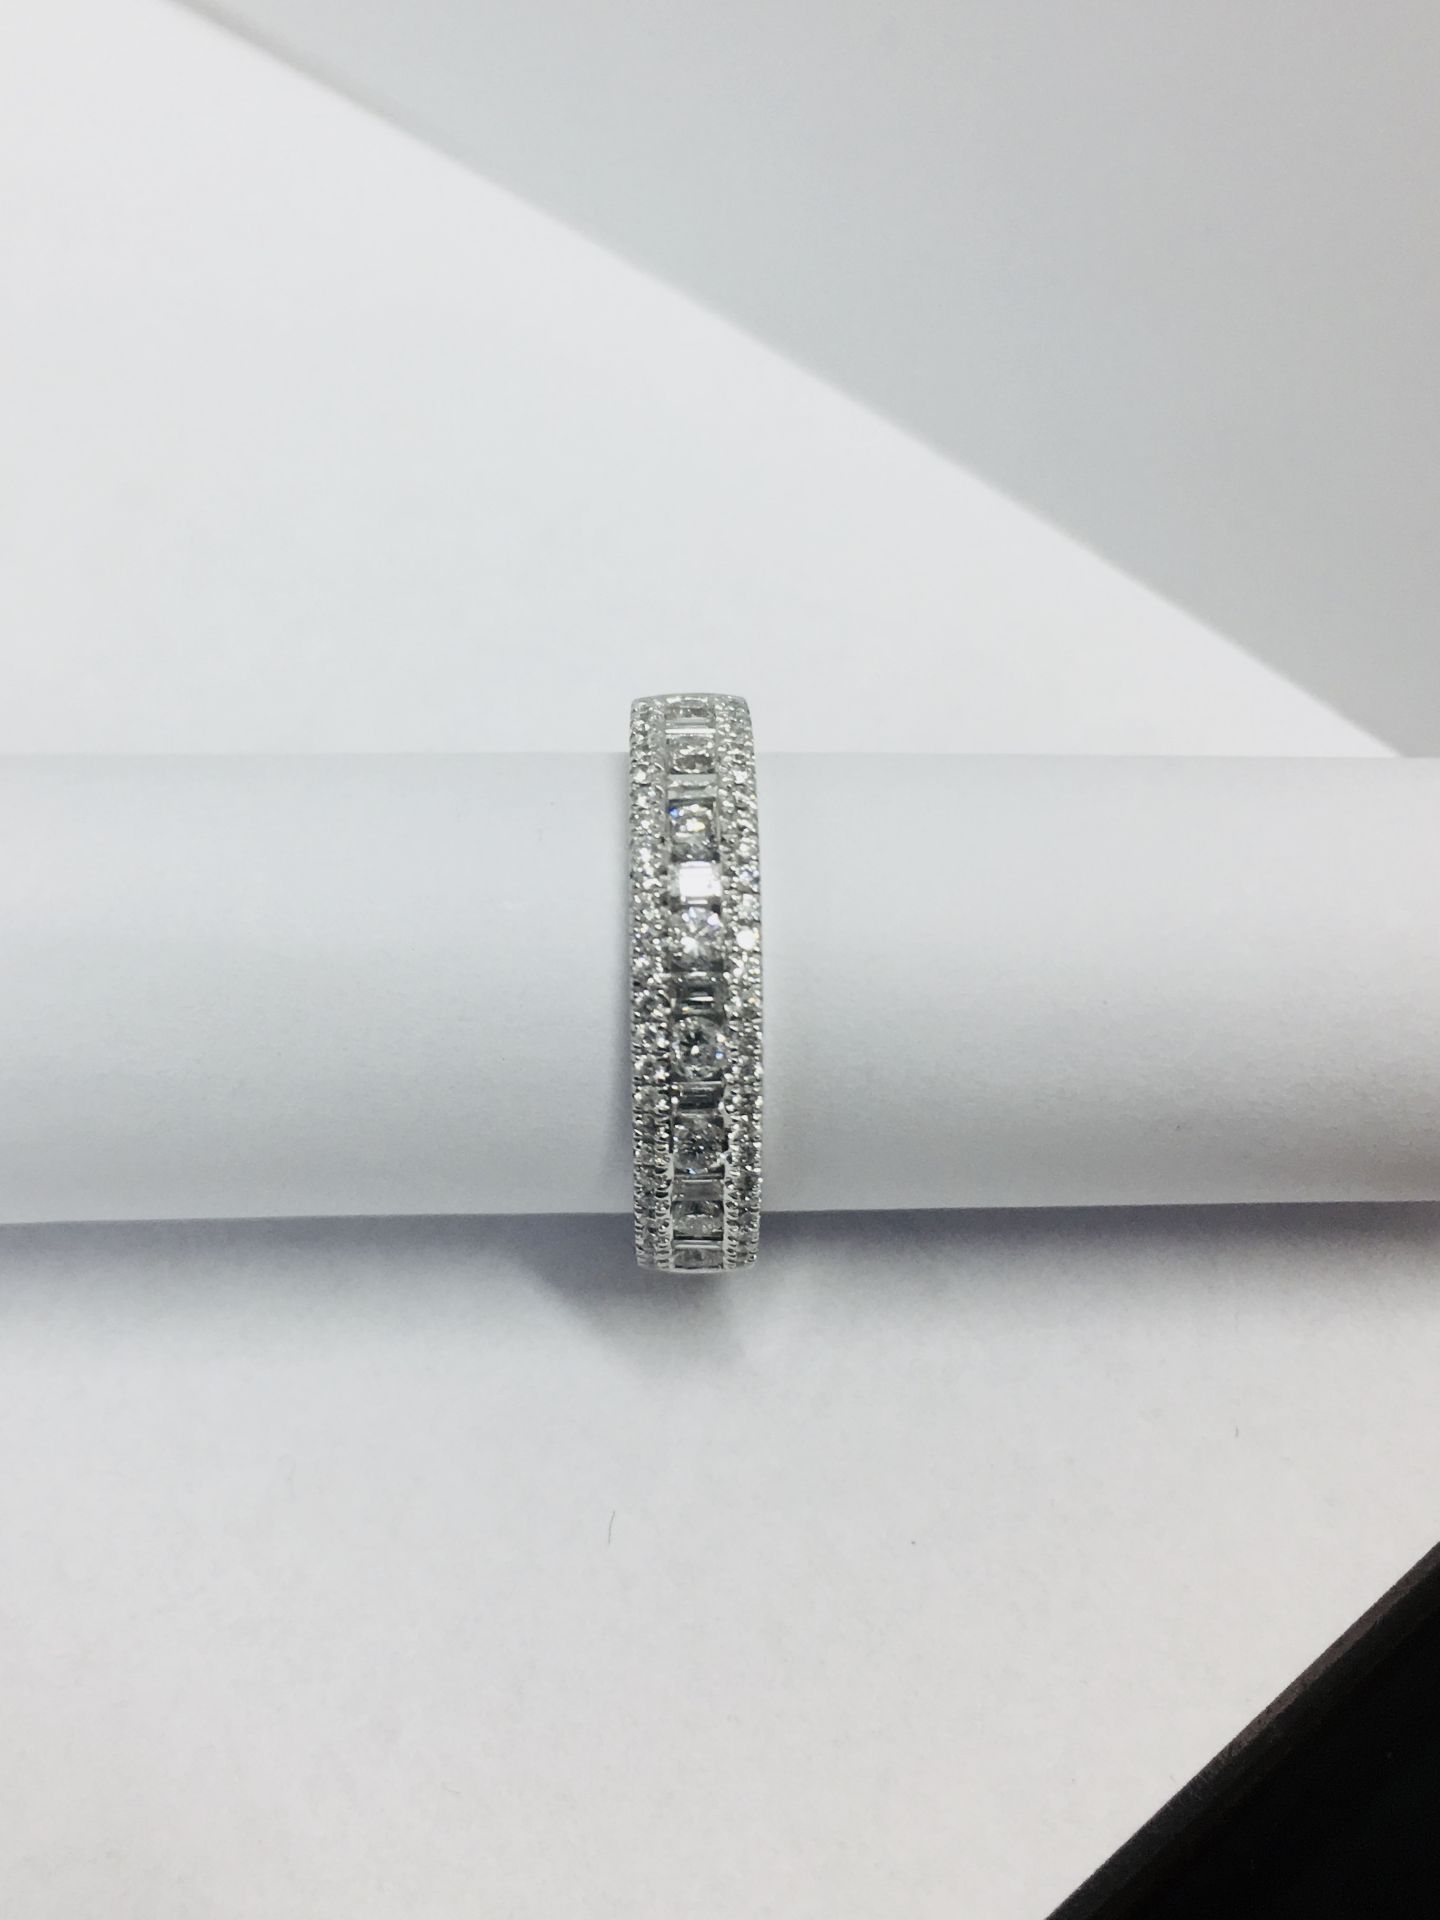 18ct white gold diamond dress ring,0.59ct diamond brilliant cut and baguette damonds h colour vs - Image 3 of 4